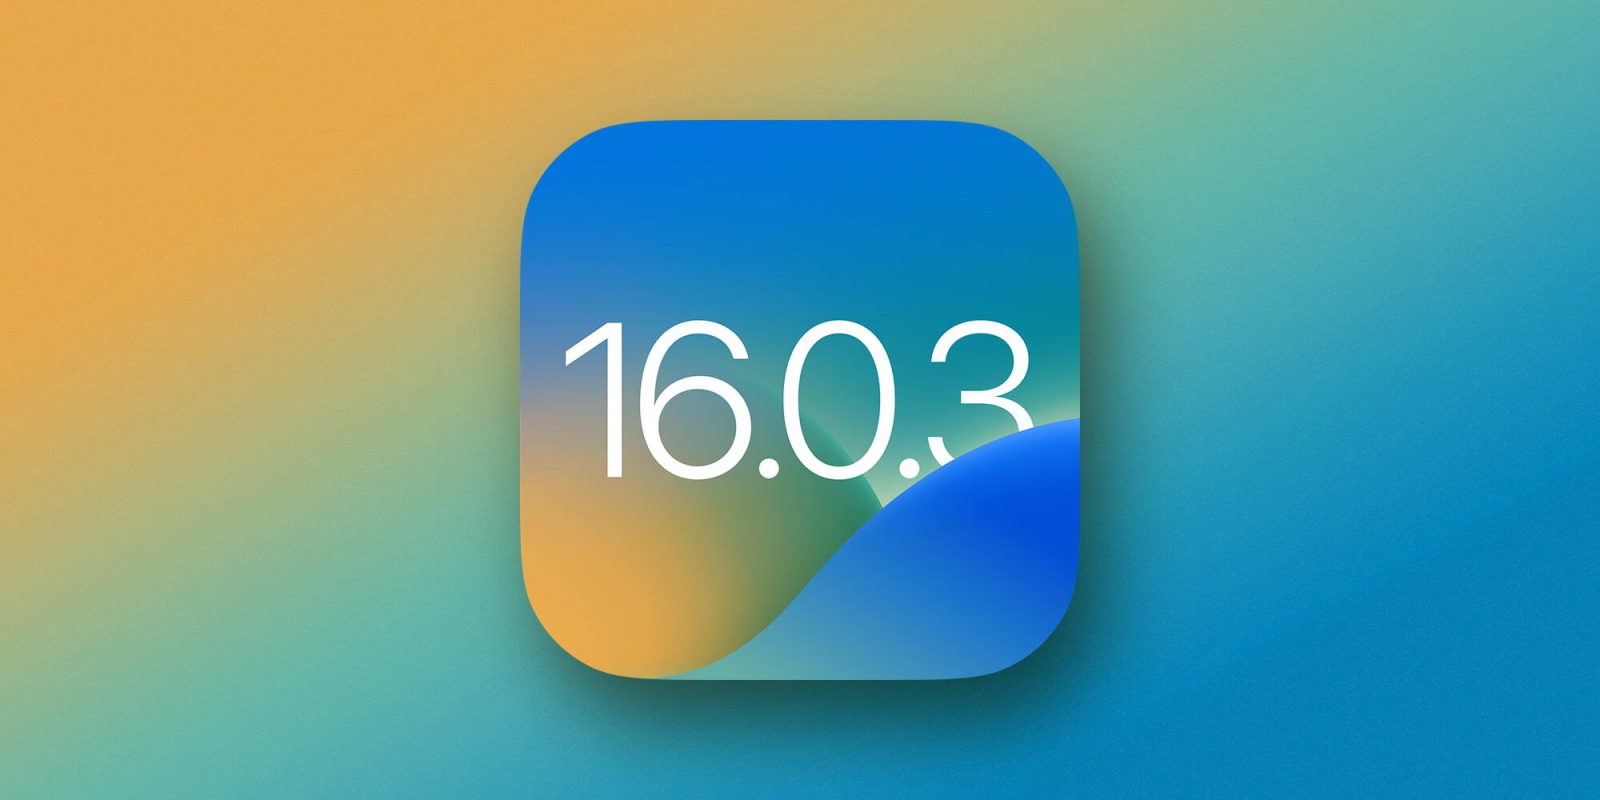 iOS 16.0.3 now available